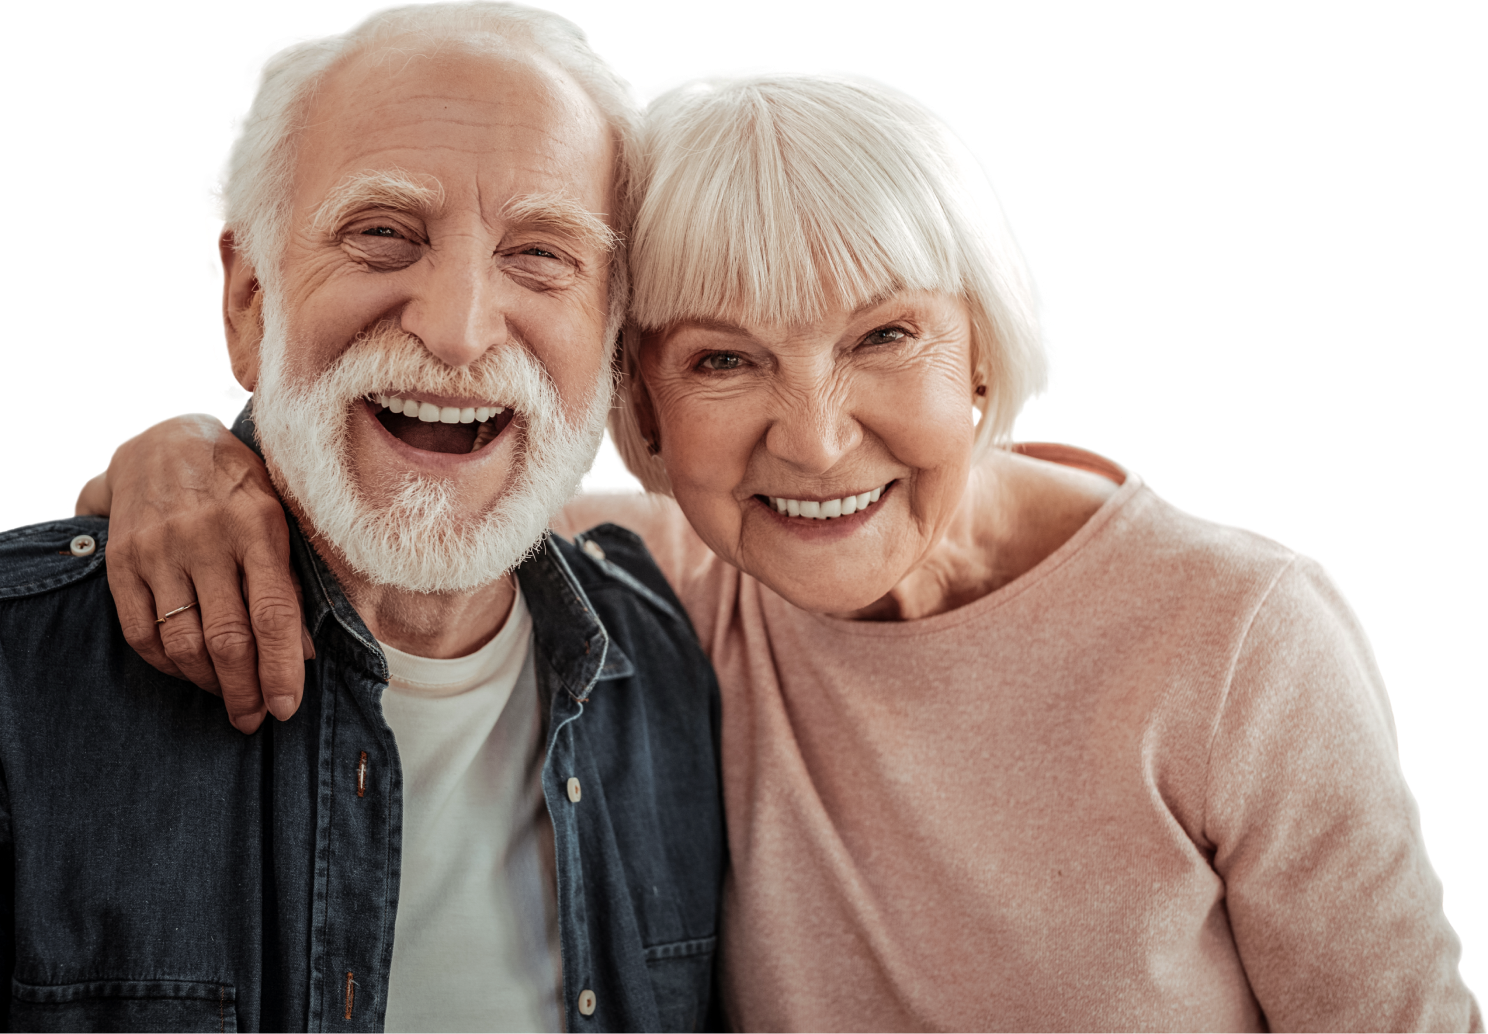 two elderly people smiling joyfully